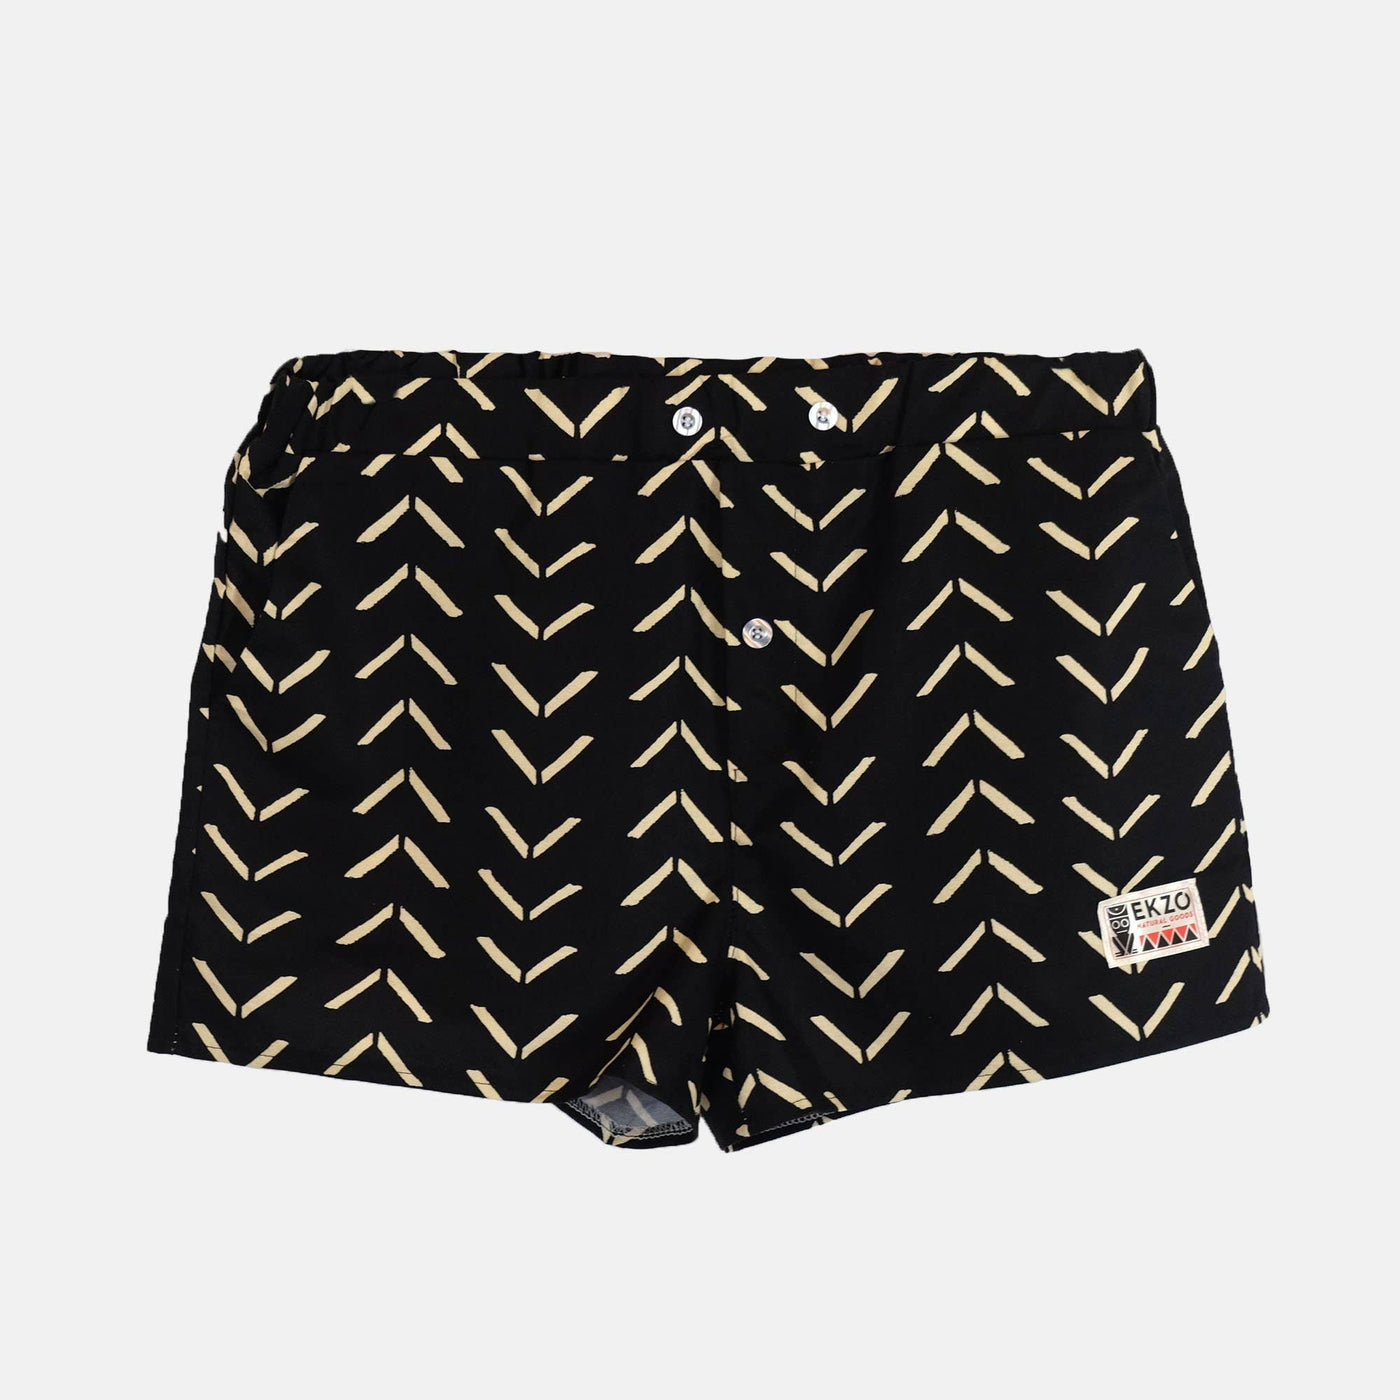 Vintage EKZOTIC Shorts - Black Savannah - The Lake and Company